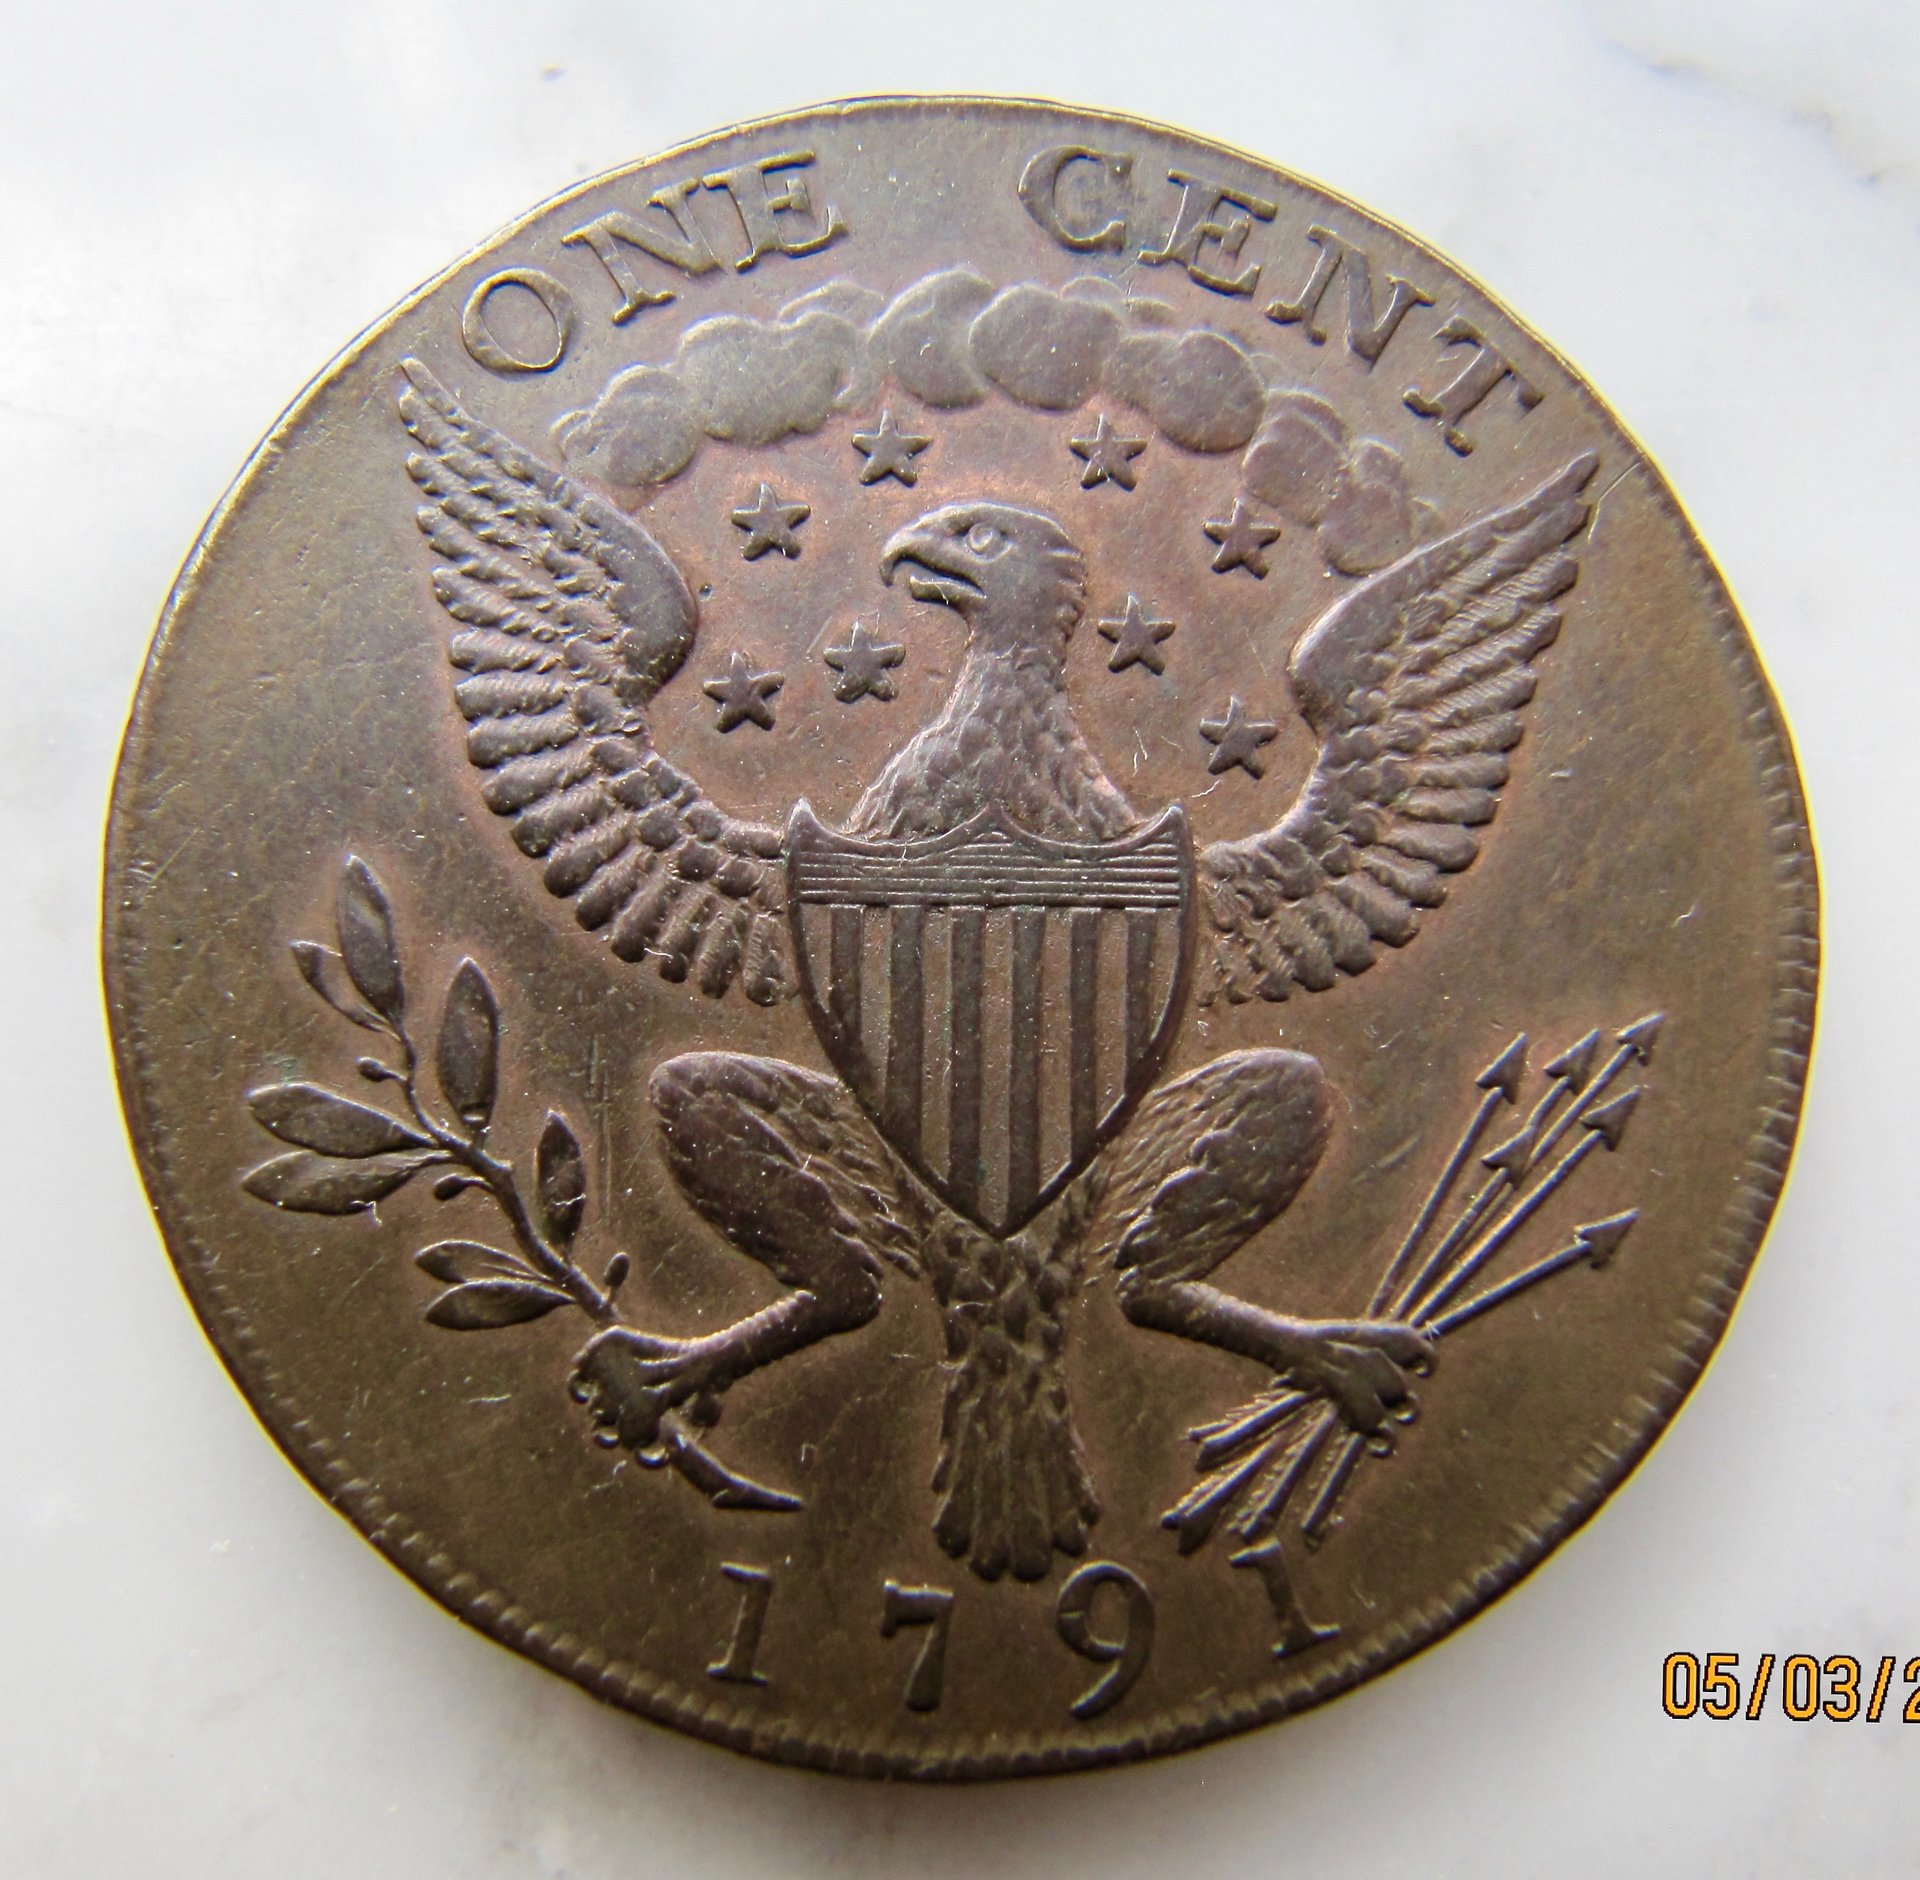 Washington cent small eagle 1791 rev1 N - 1.jpg